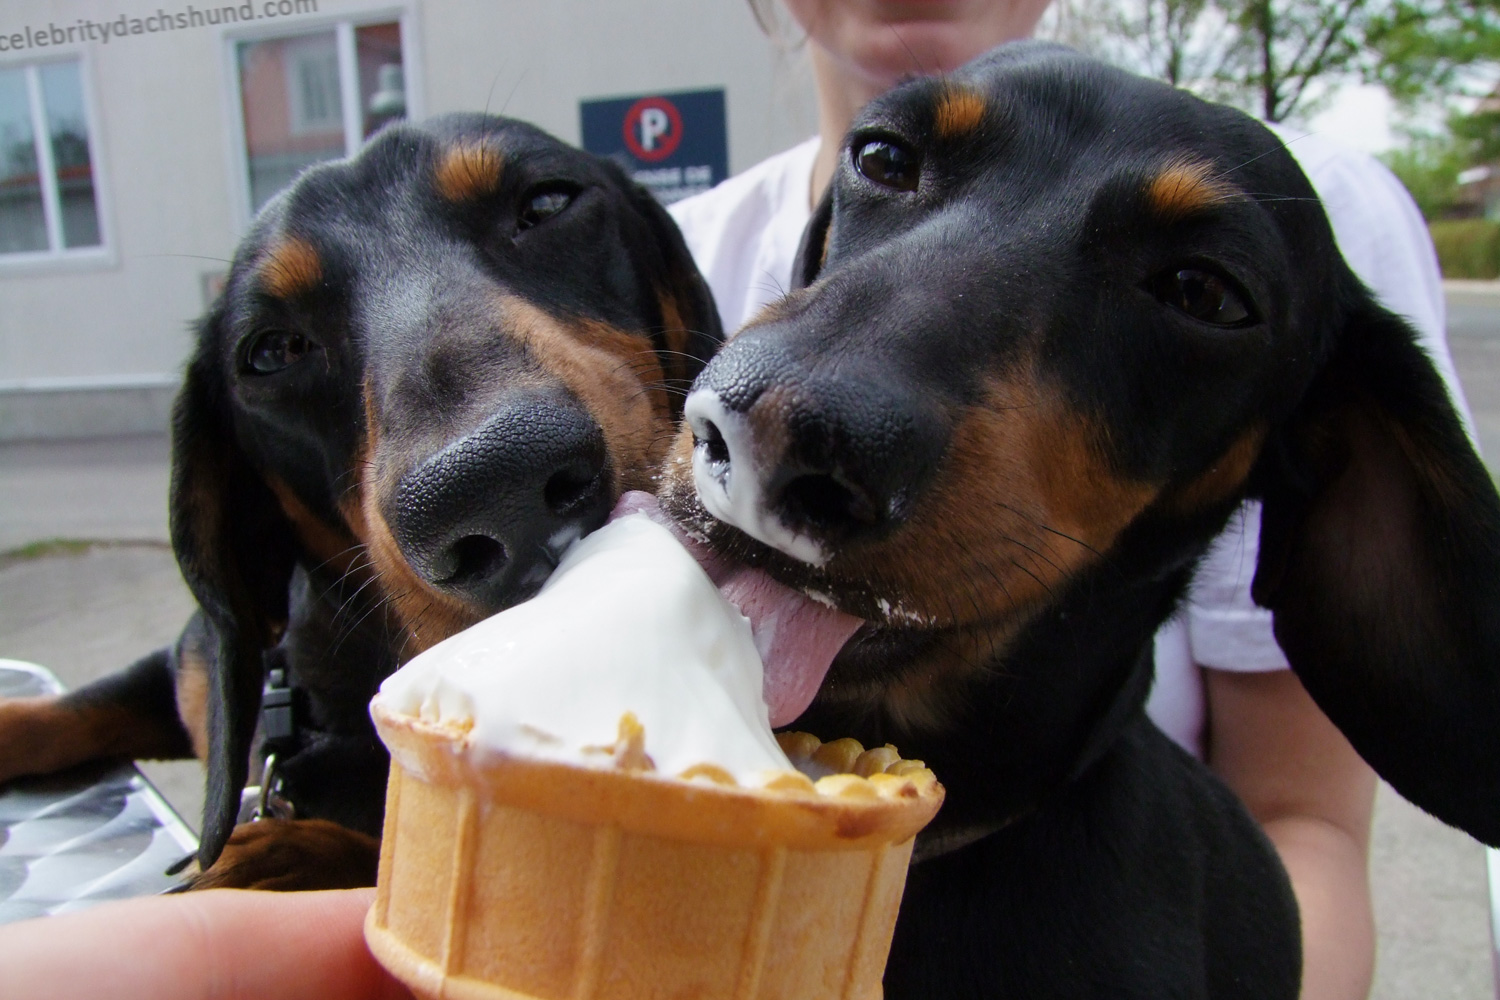 crusoe dachshund pupcone junk food ice cream